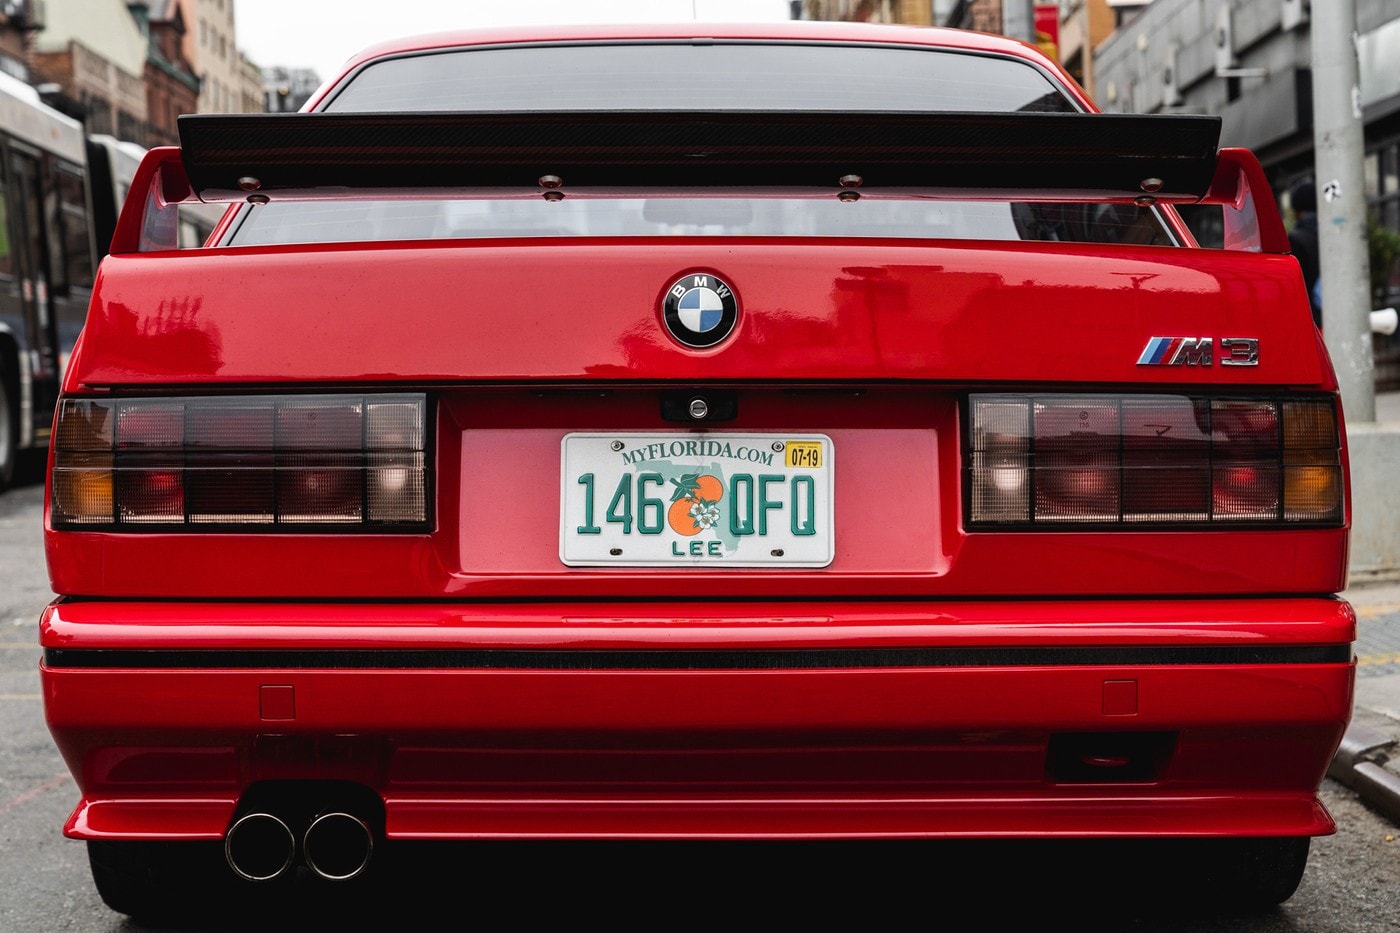 玩具實體化！Supreme x Hot Wheels BMW E30 M3 現身紐約